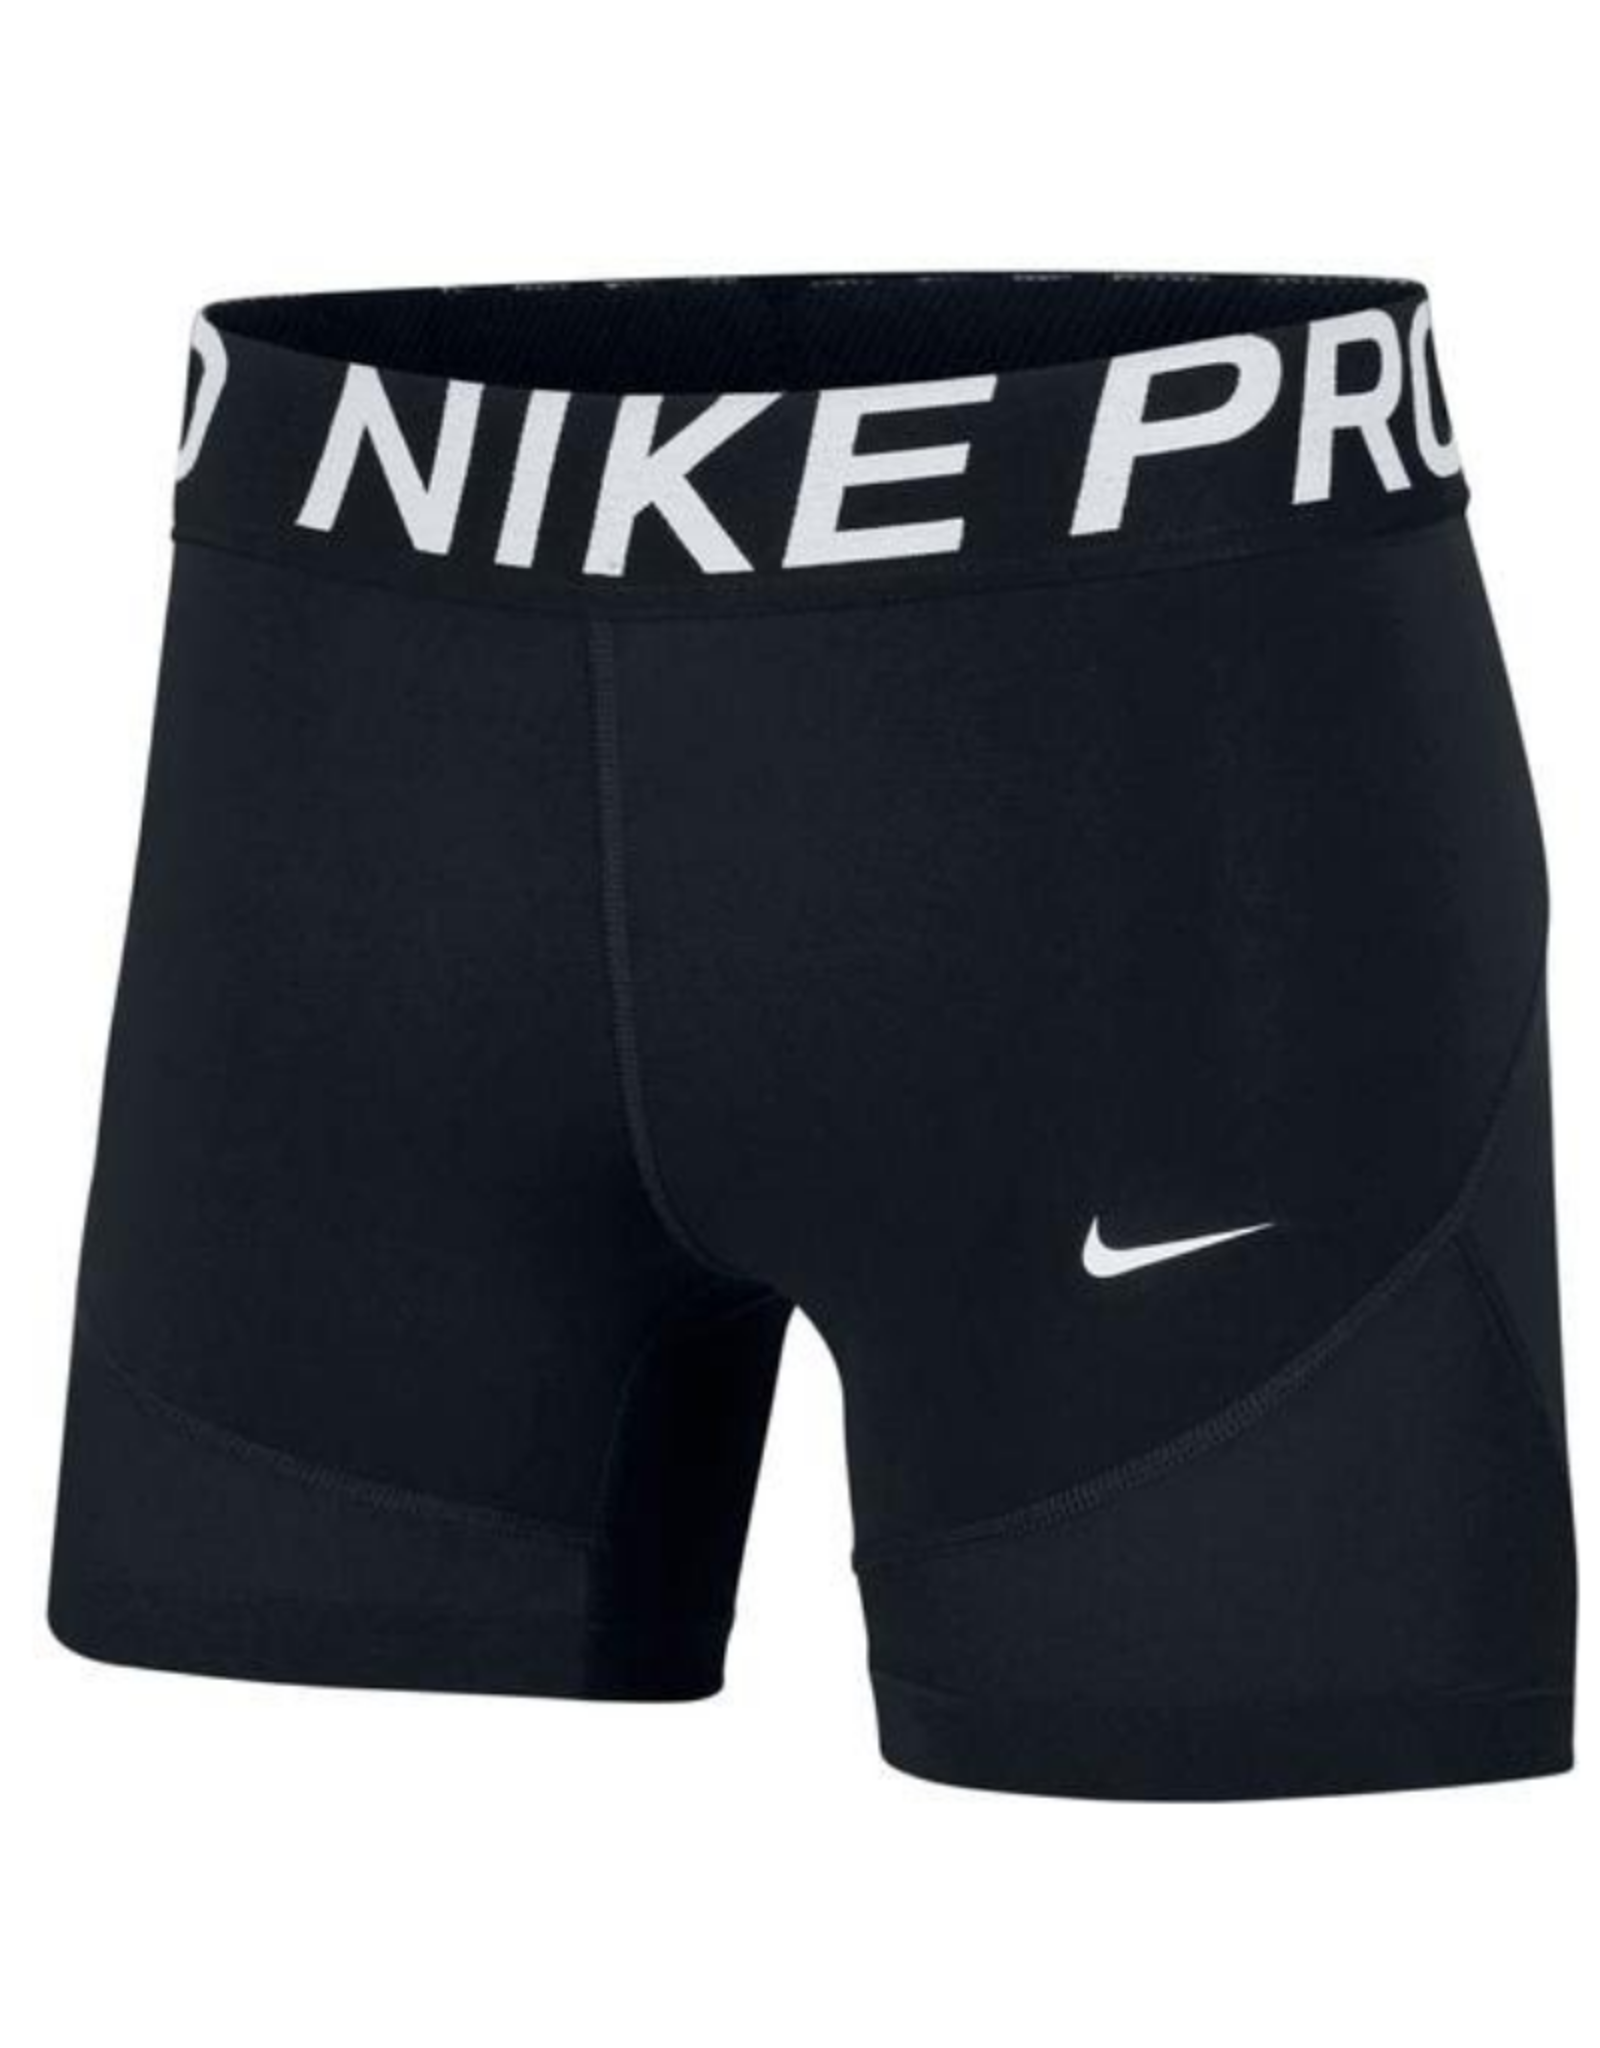 nike pro volleyball shorts